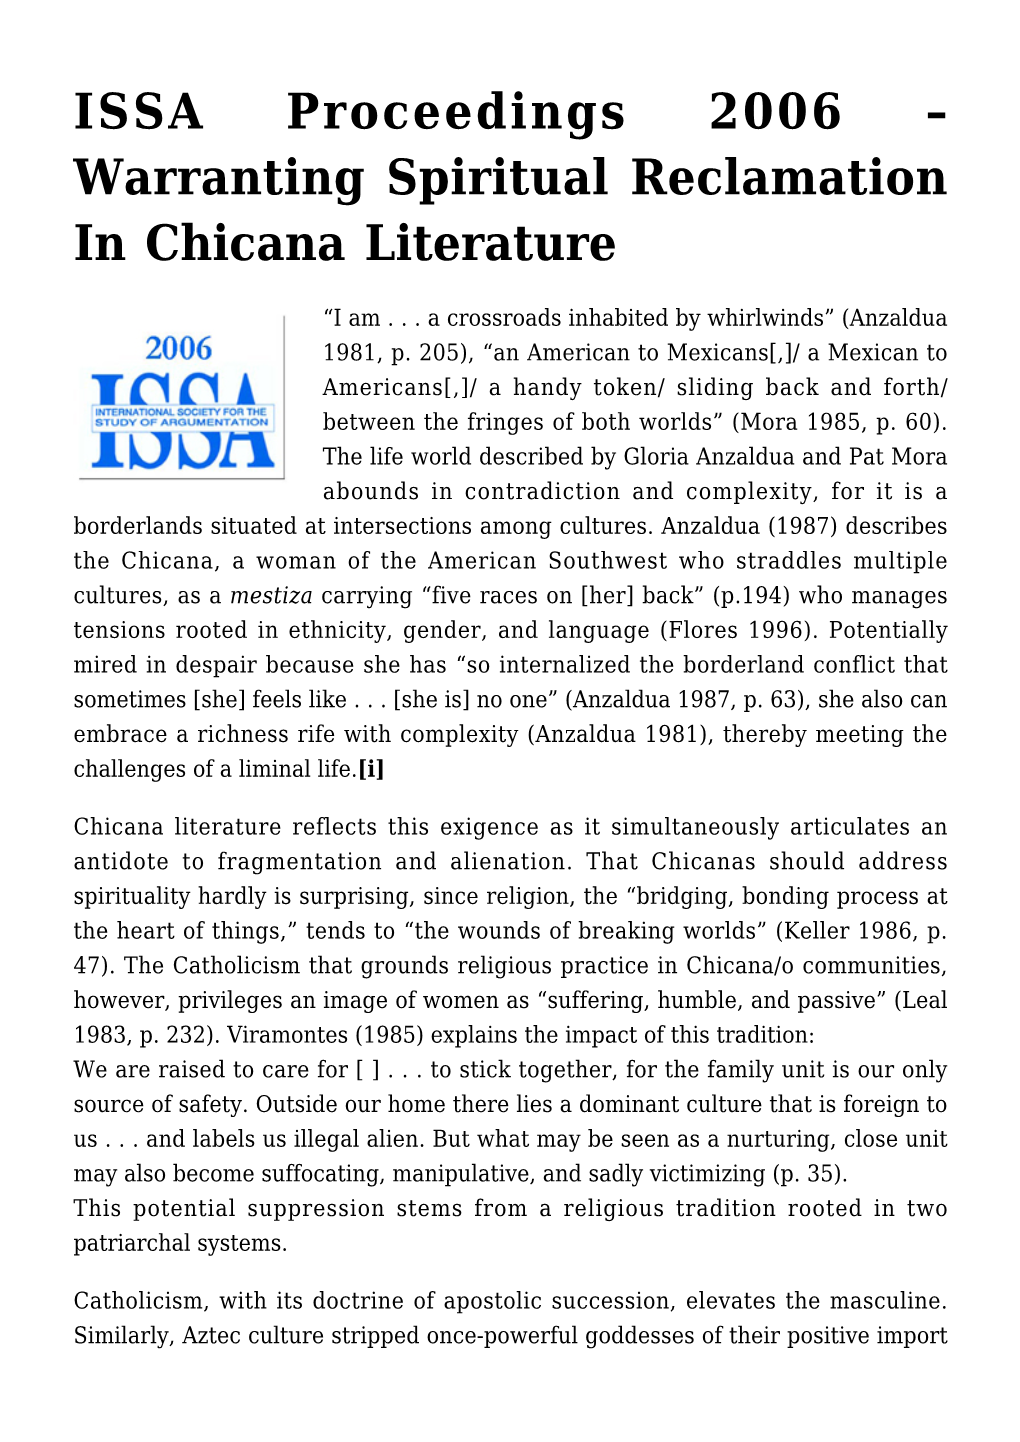 Warranting Spiritual Reclamation in Chicana Literature